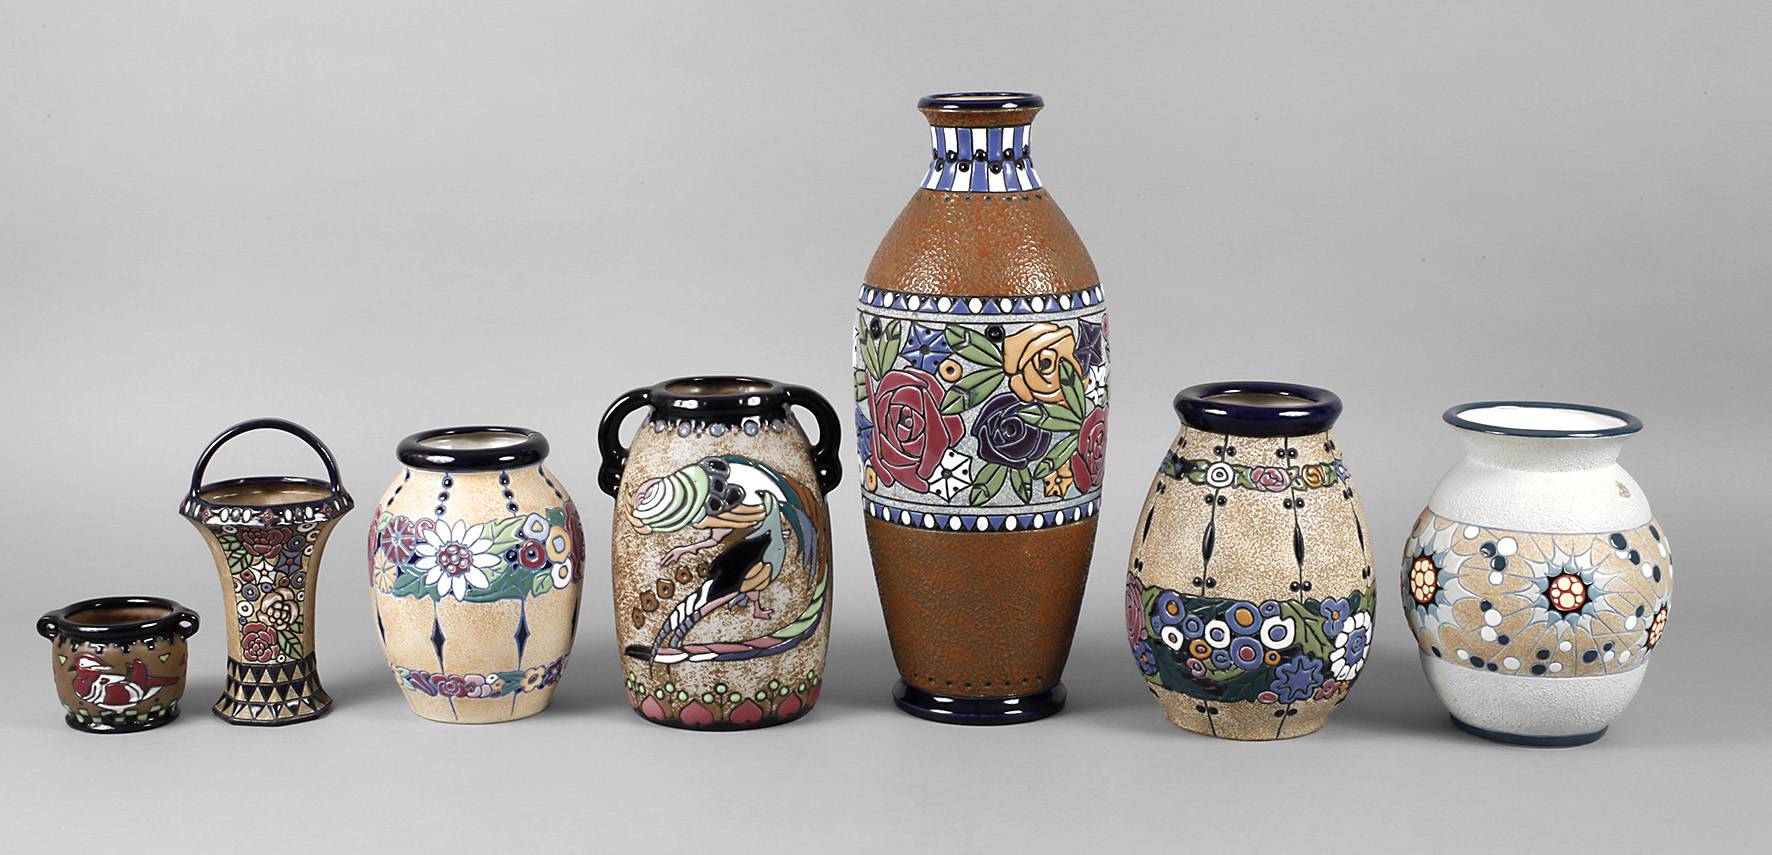 Amphora Vasensammlung